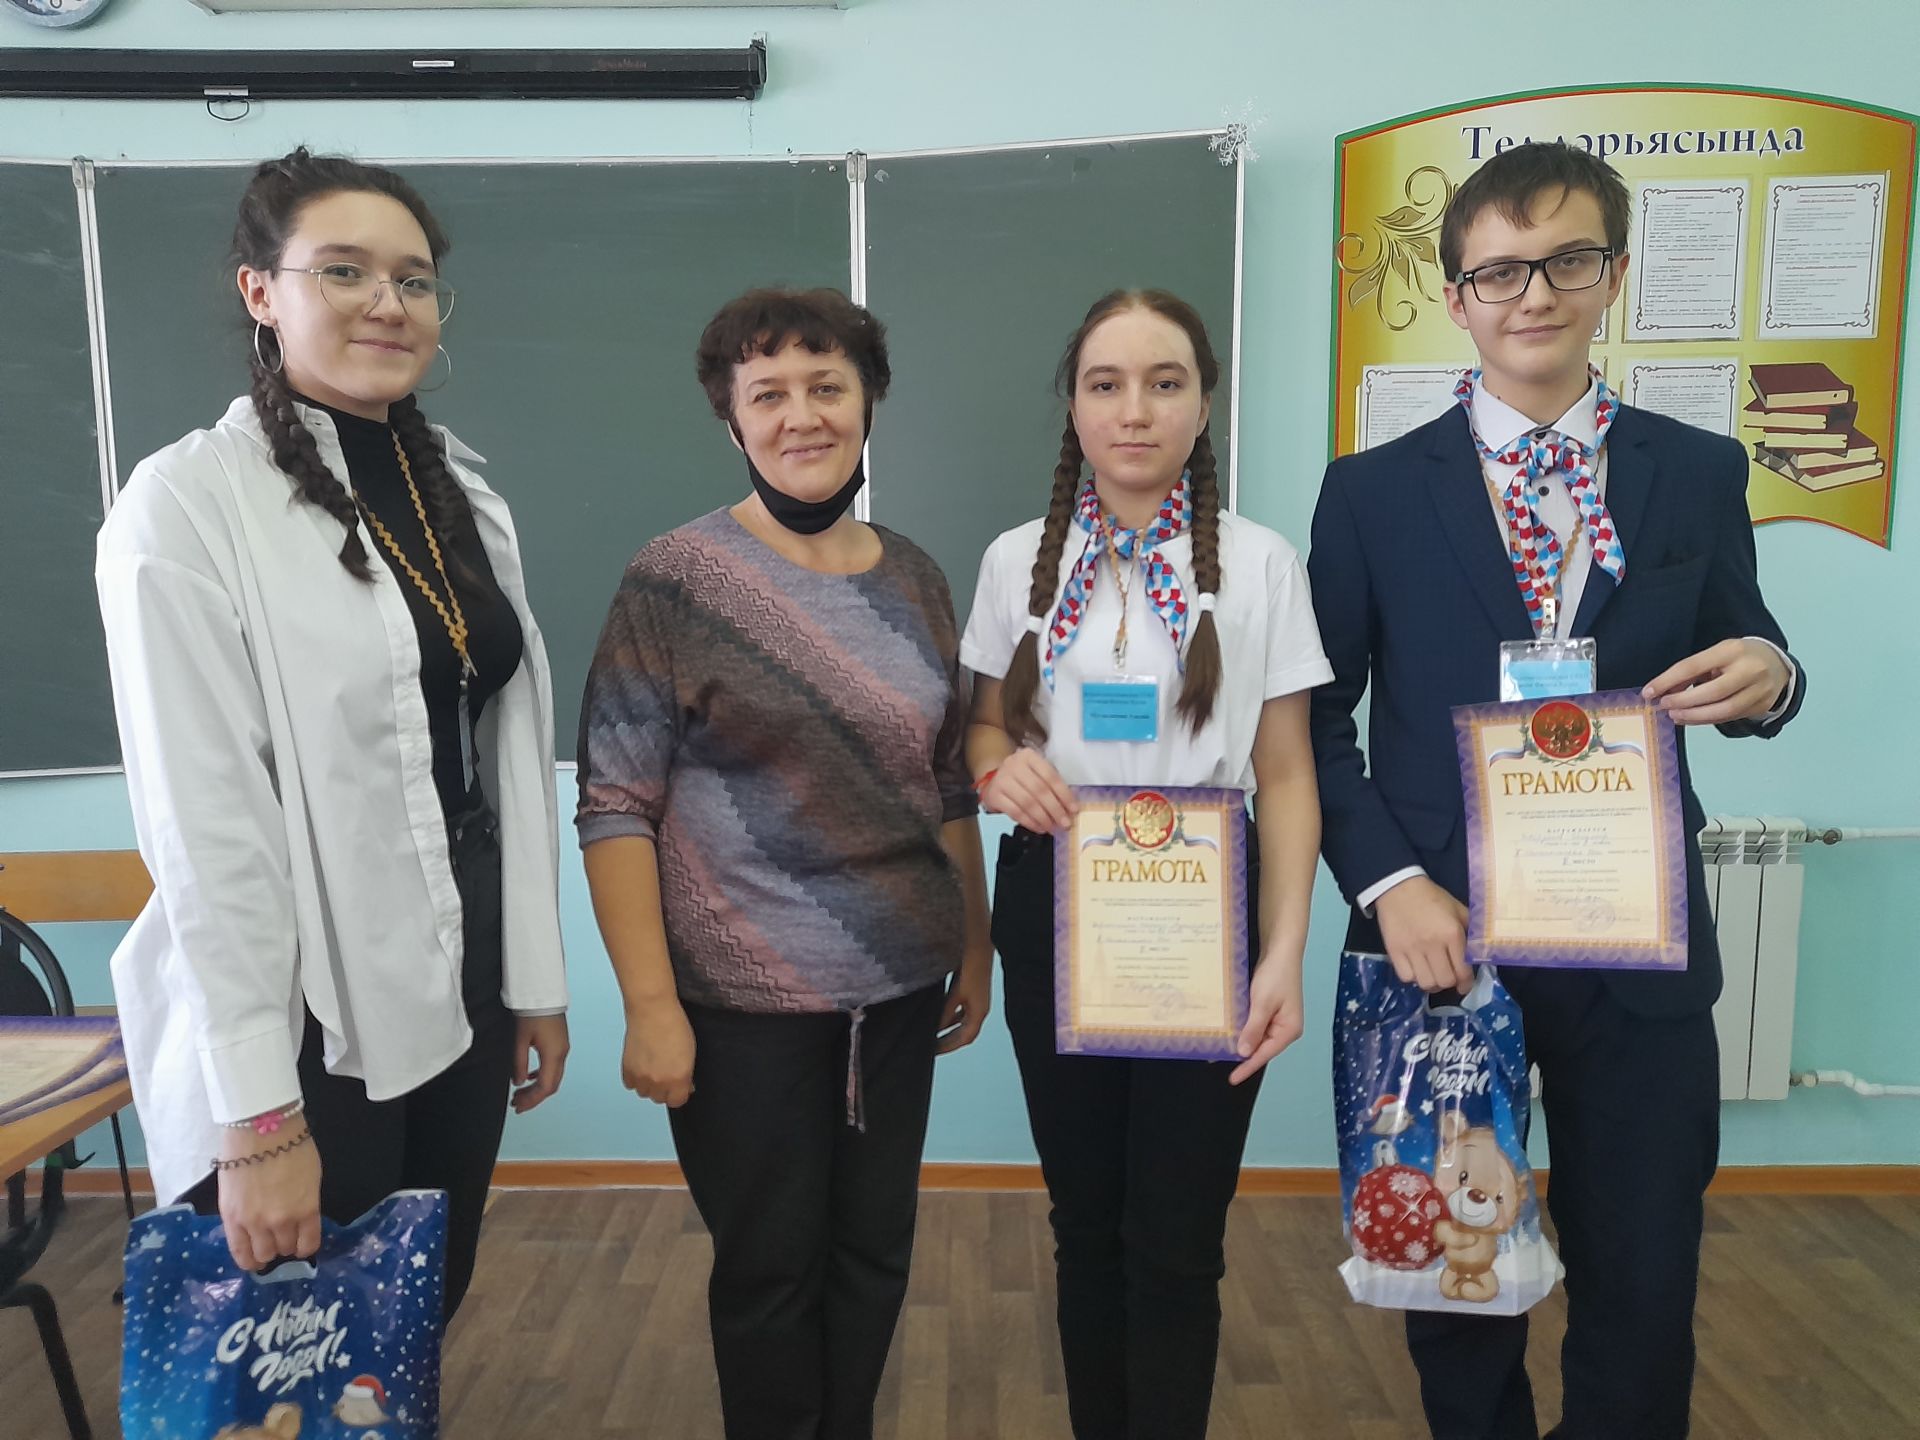 "WorldSkills Tyulyachi-Junior 2021" осталык чемпионаты